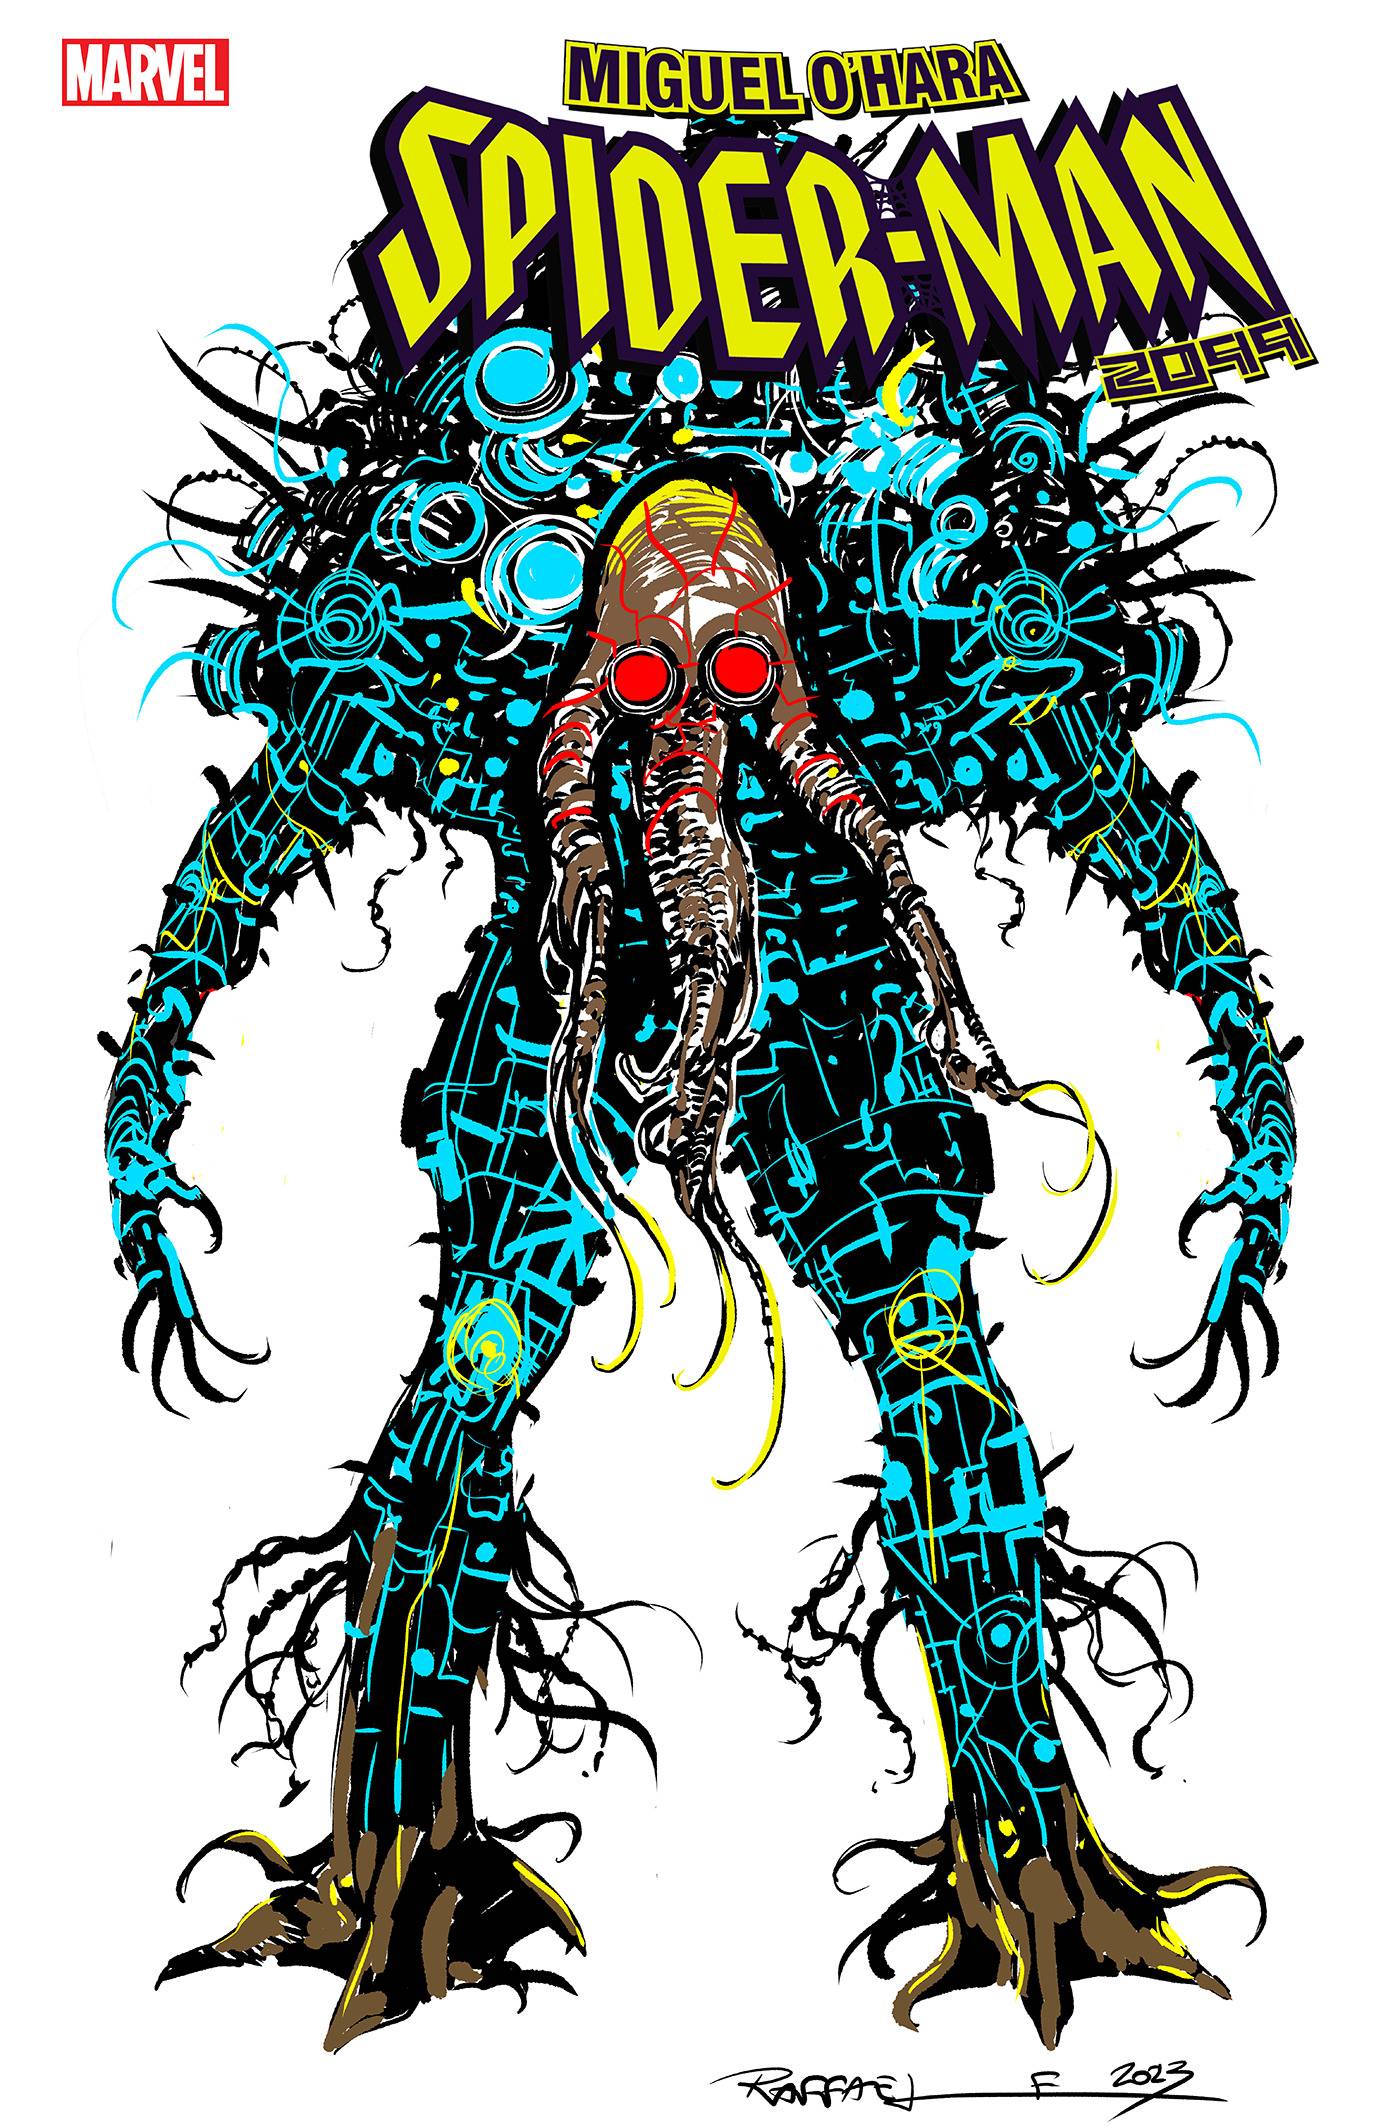 MIGUEL OHARA SPIDER-MAN 2099 #5 1:10 COPY INCV RAFFAELE DESIGN VAR